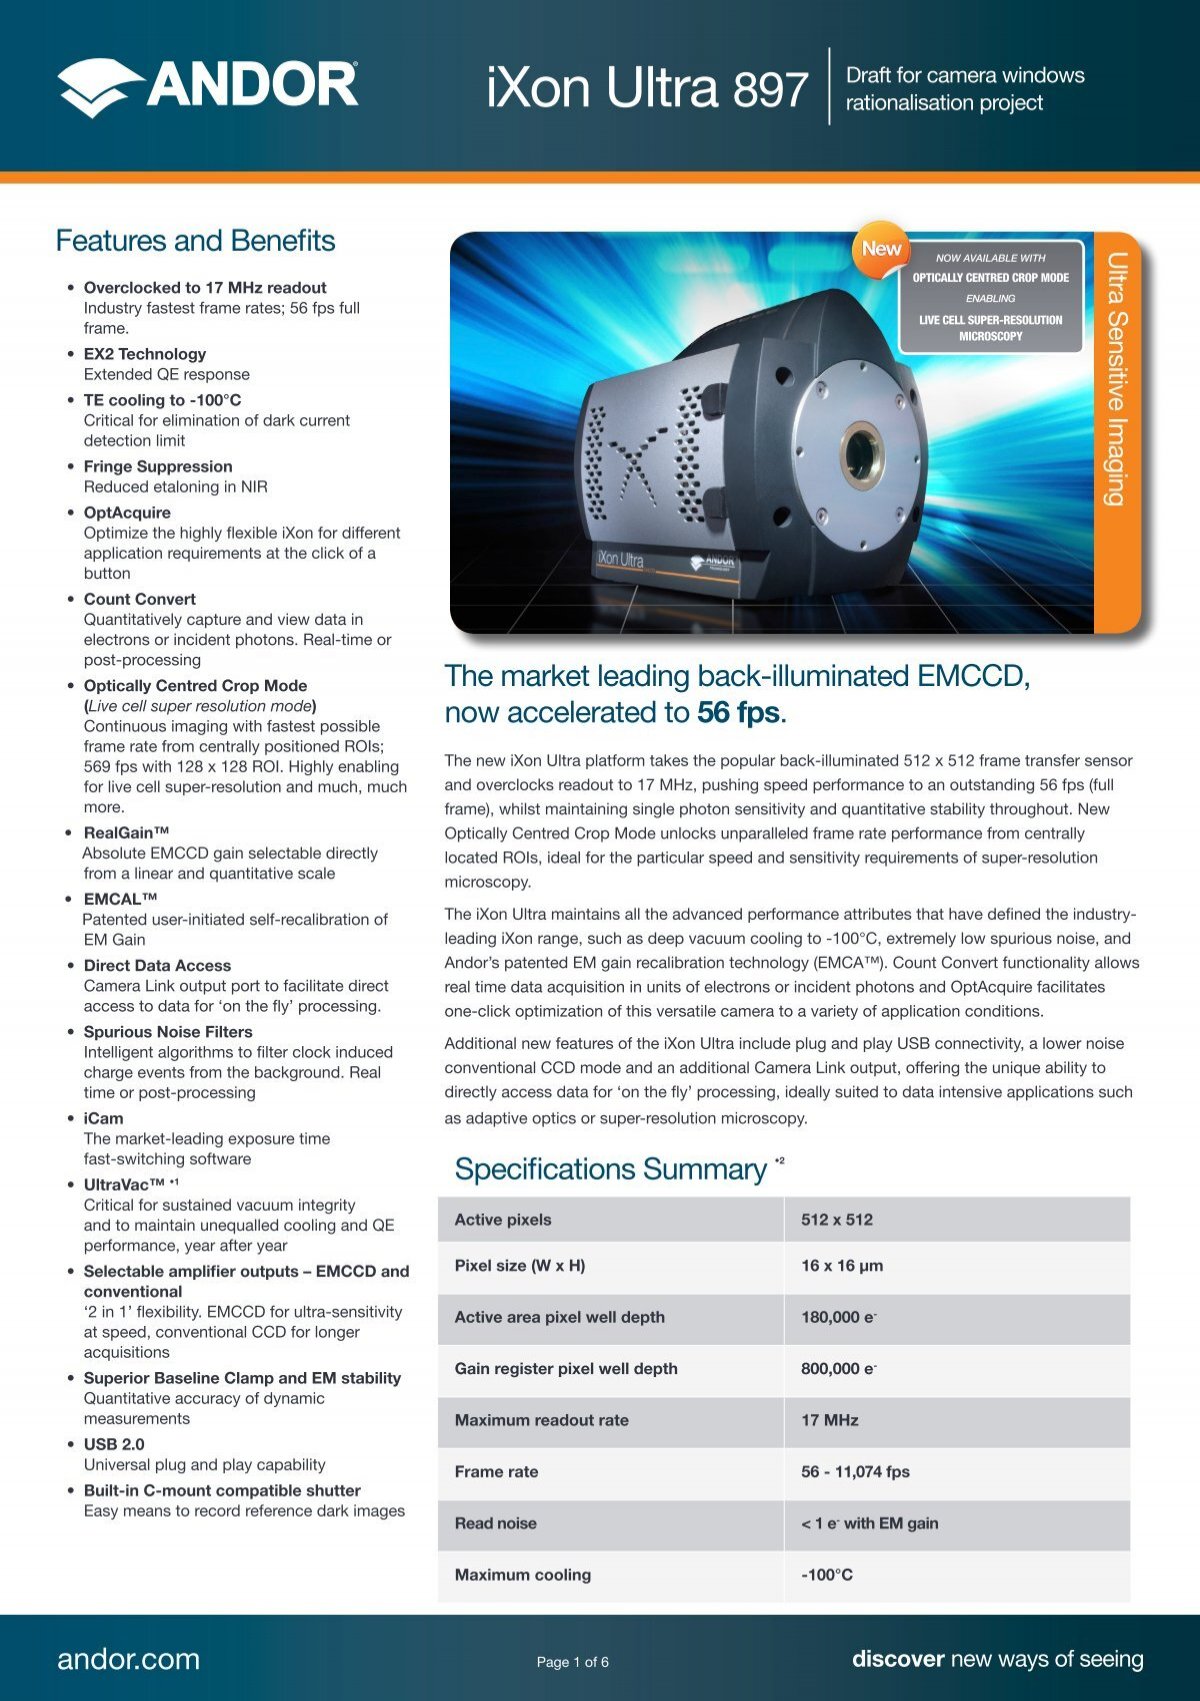 New Ixon Ultra 897 Emccd Andor Technology